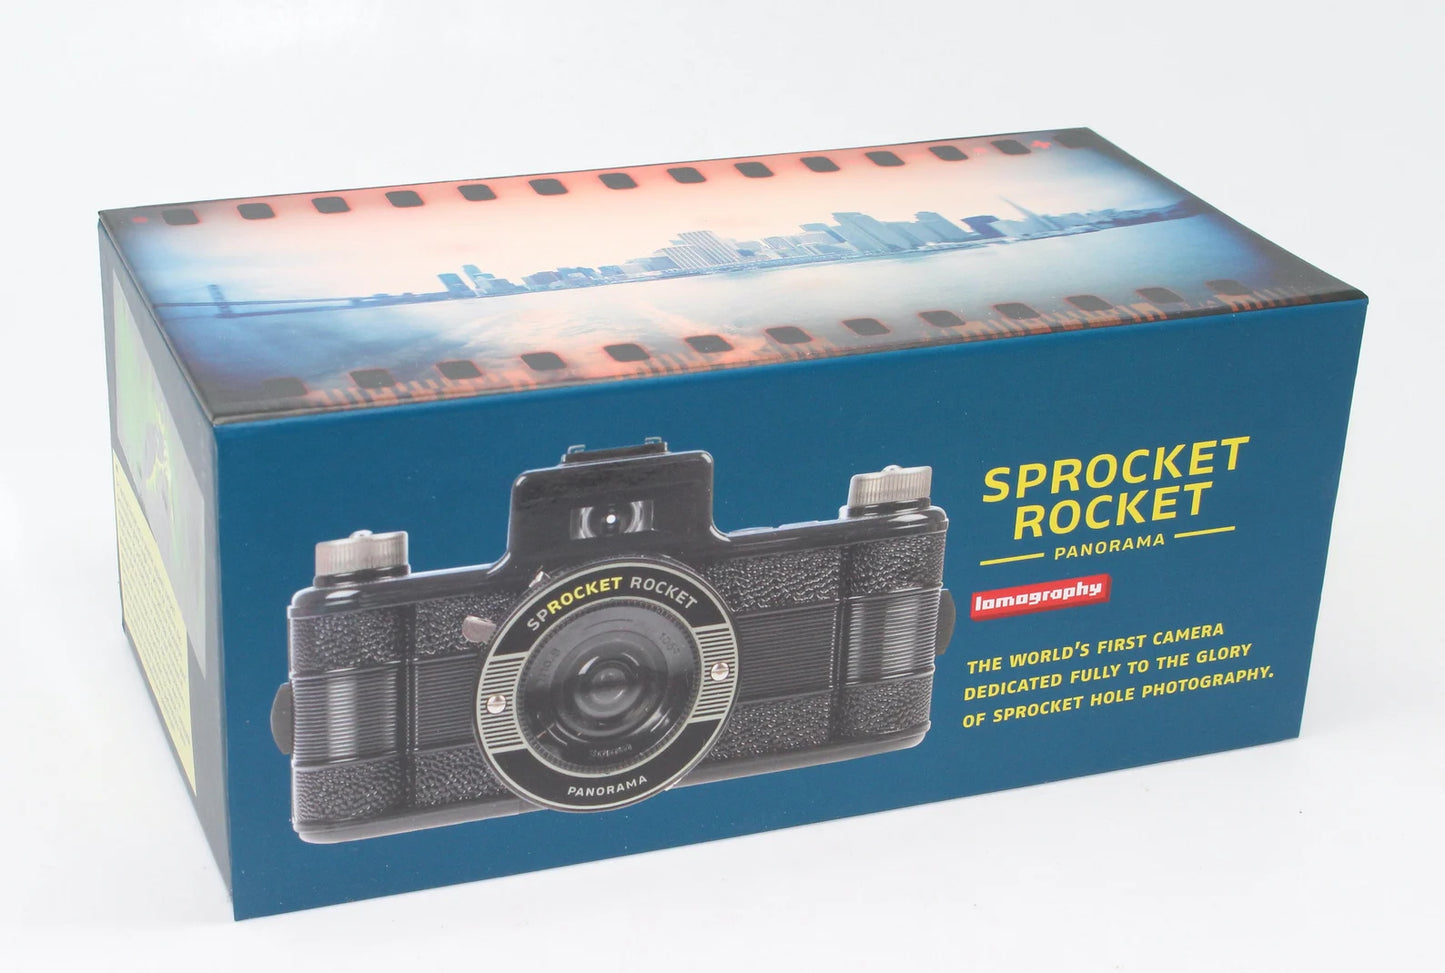 Sprocket Rocket 35 mm Film Panoramic Camera